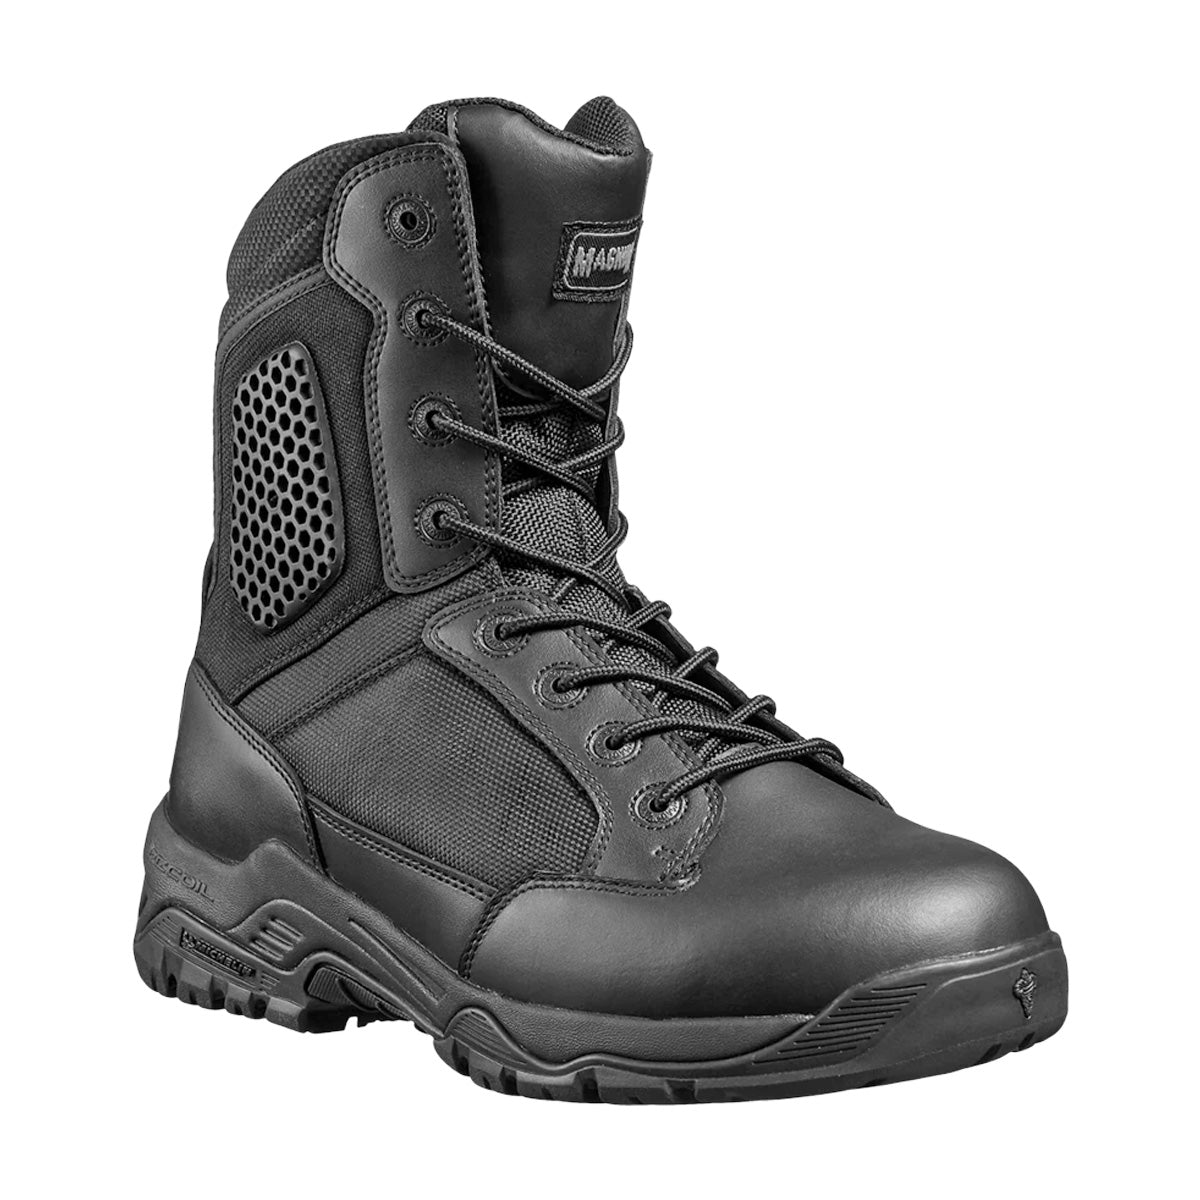 Magnum Strike Force 8.0 Side-Zip Composite Toe Boots Black Footwear Magnum Footwear Tactical Gear Supplier Tactical Distributors Australia